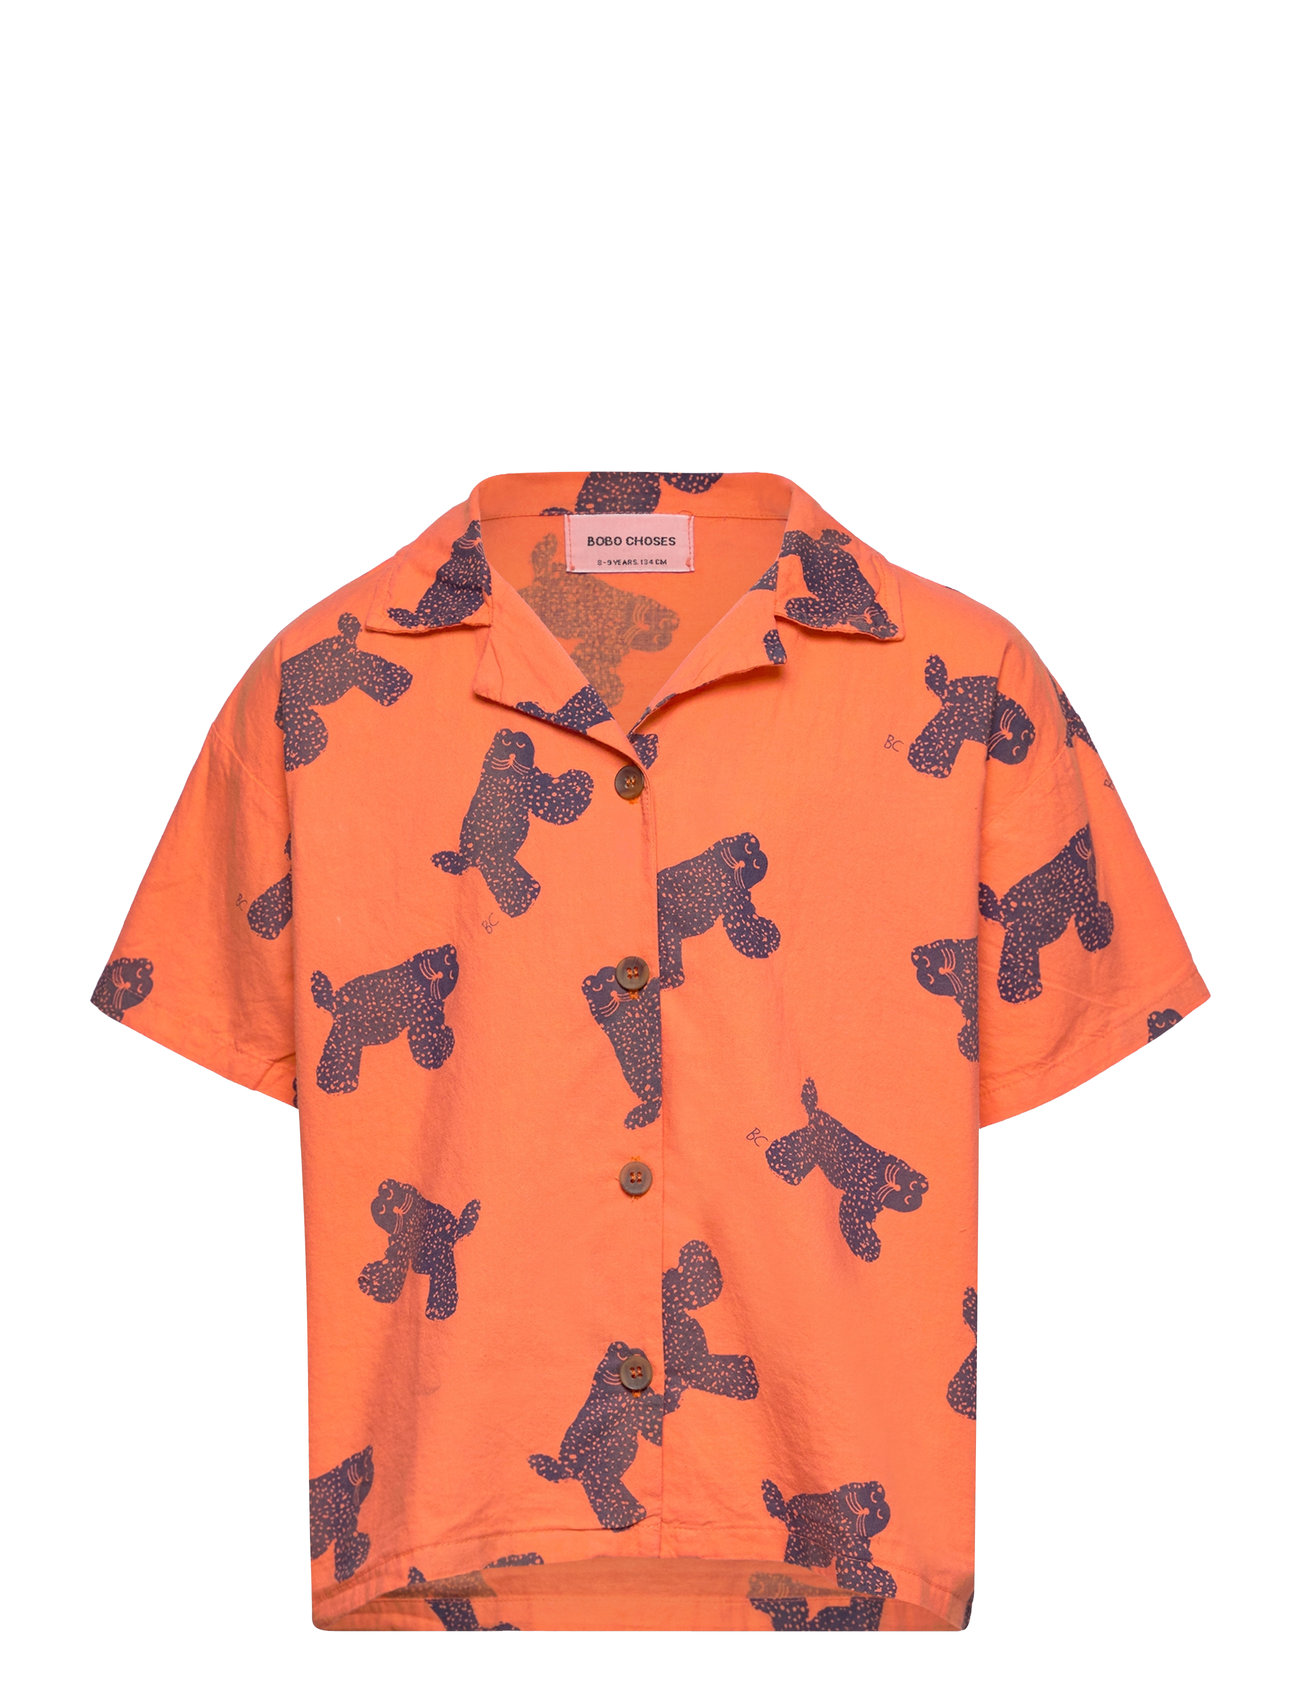 Big Cat All Over Woven Shirt Tops Shirts Short-sleeved Shirts Multi/patterned Bobo Choses